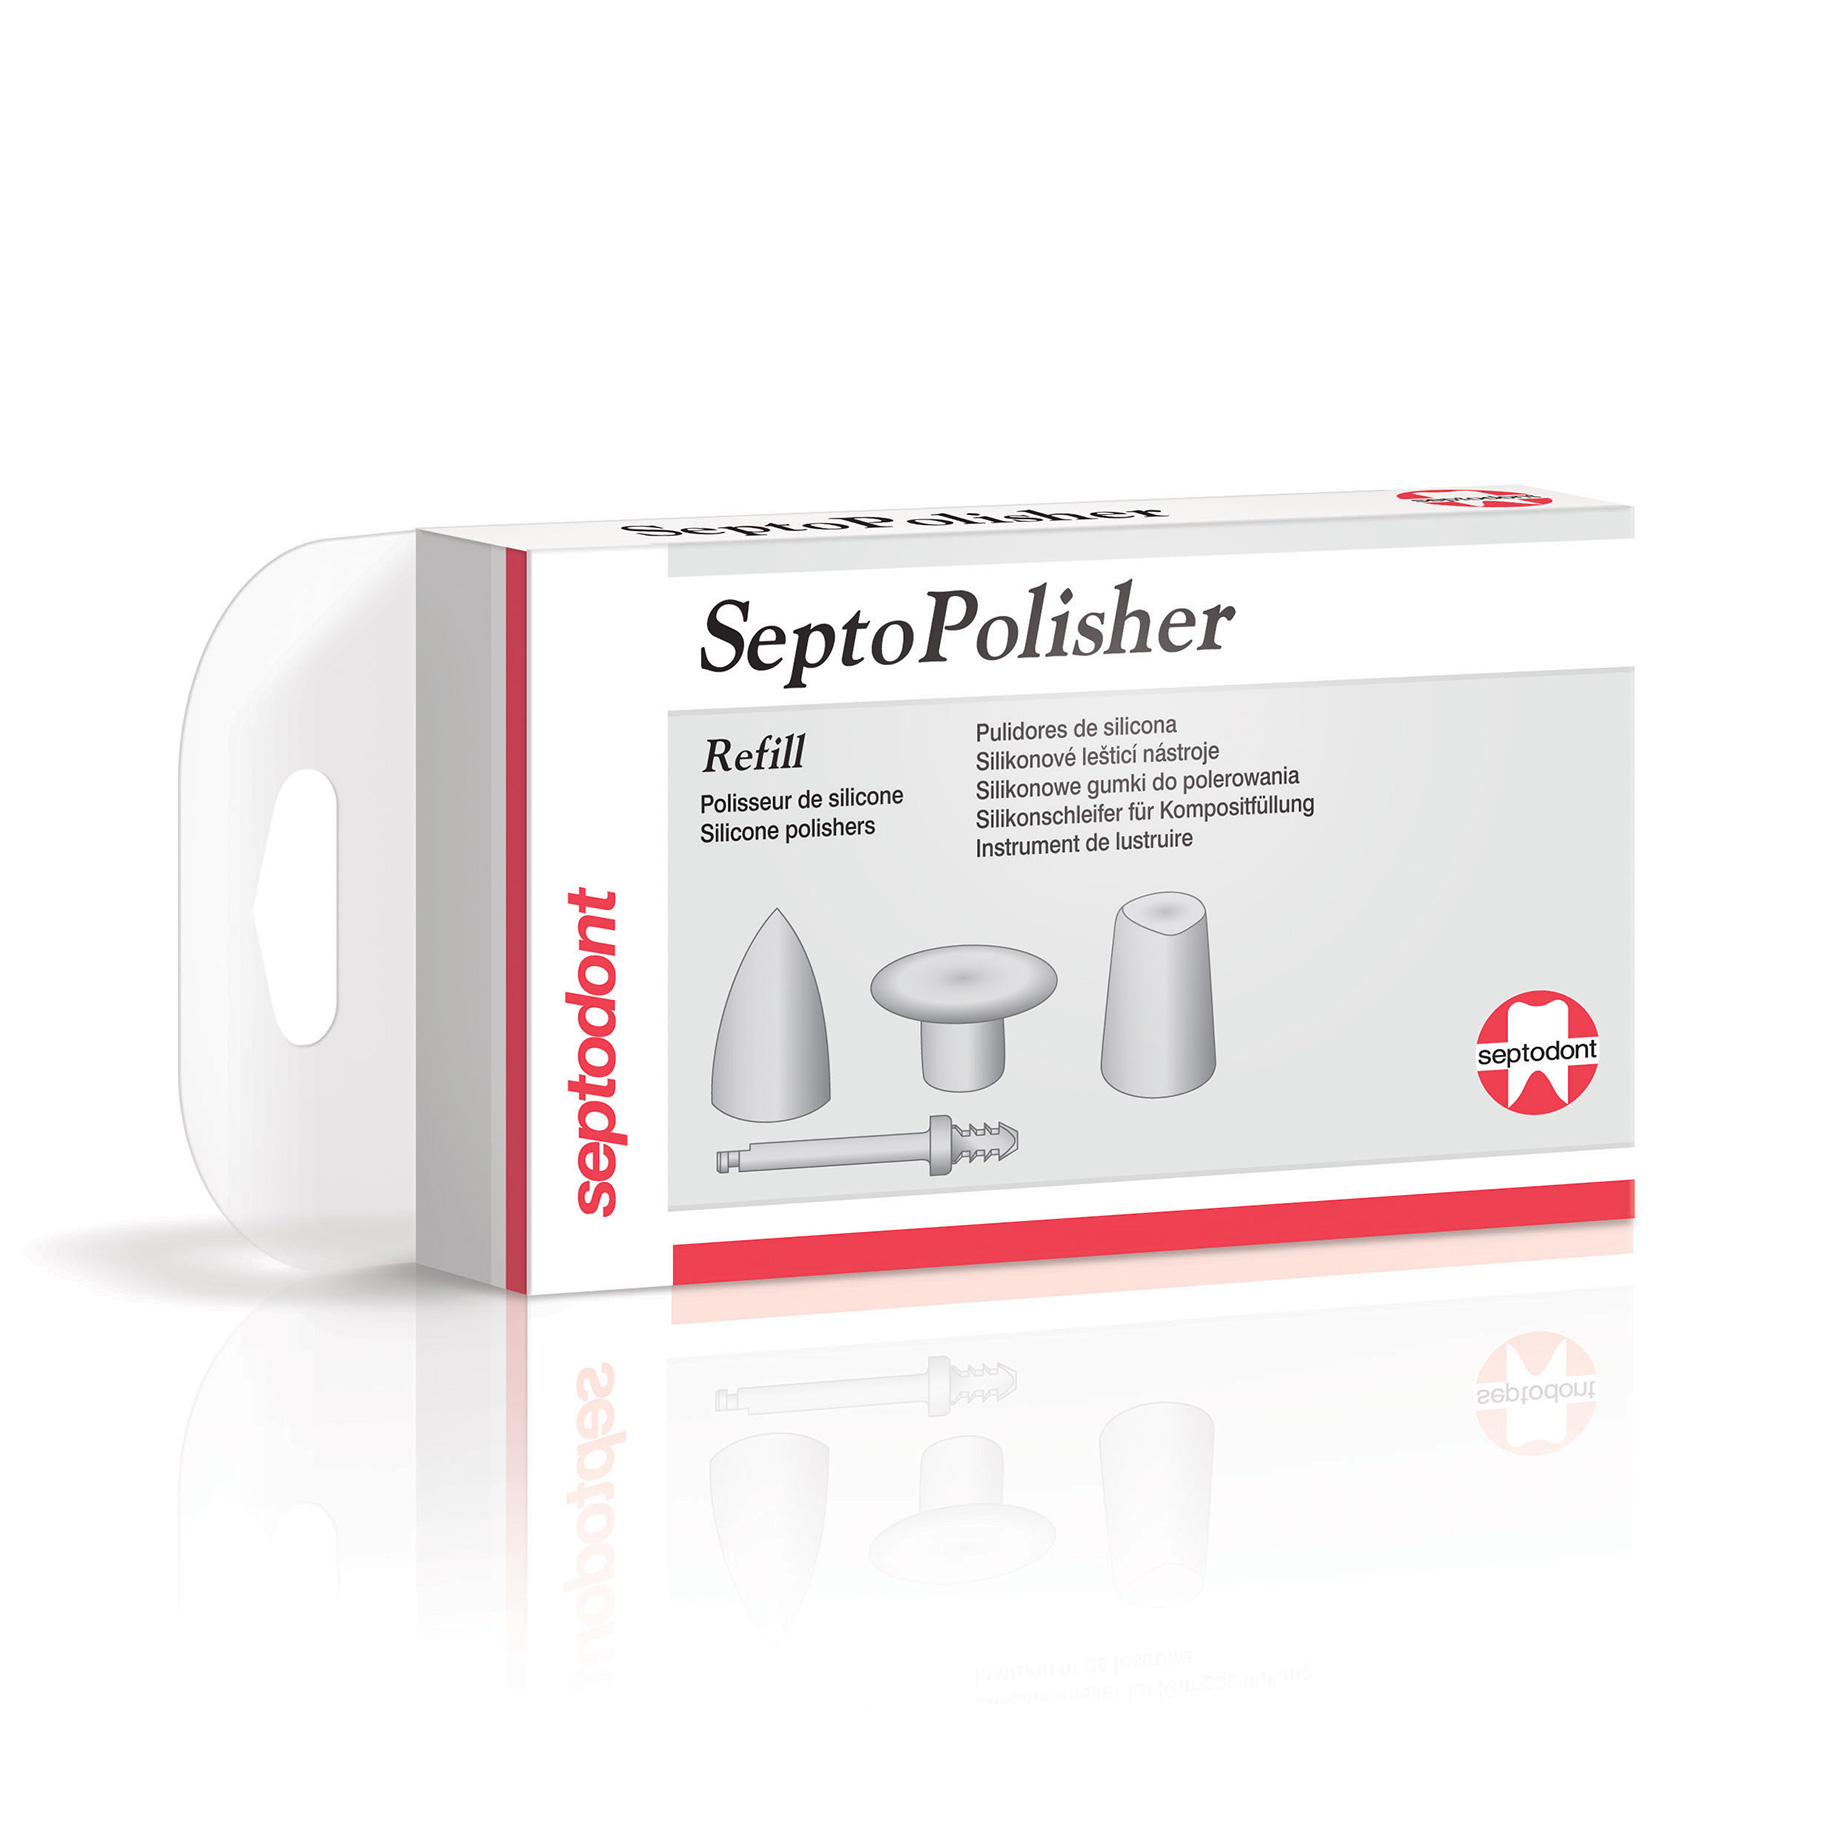 SeptoPolisher Refill: 8 Cup-shaped + 1 mandrel 